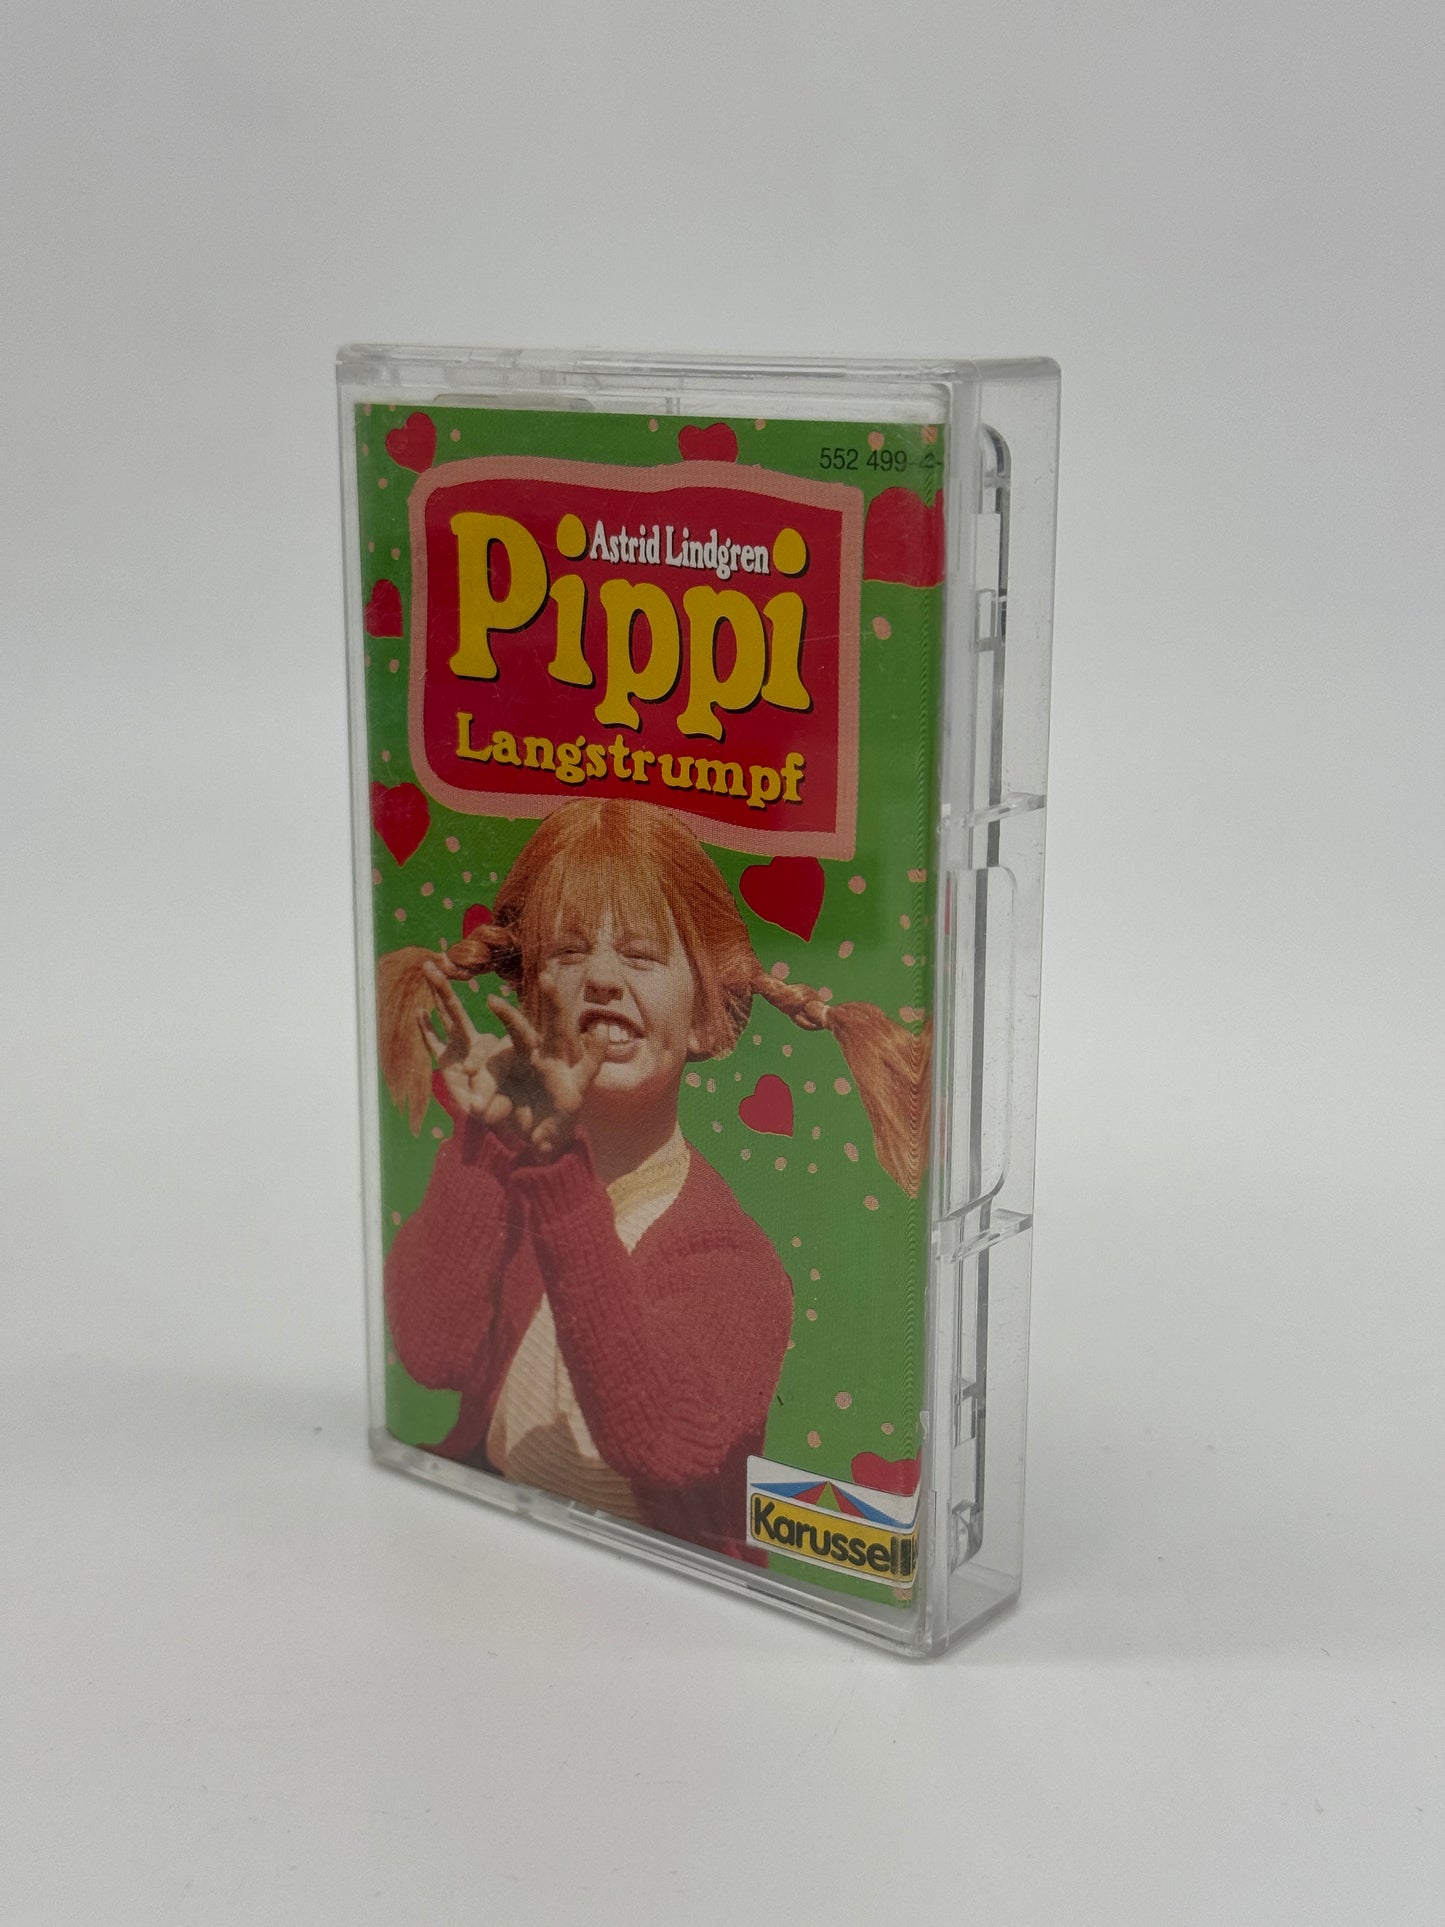 Astrid Lindgren "Pippi Langstrumpf" Hörspielkassette nach dem Film (1989)